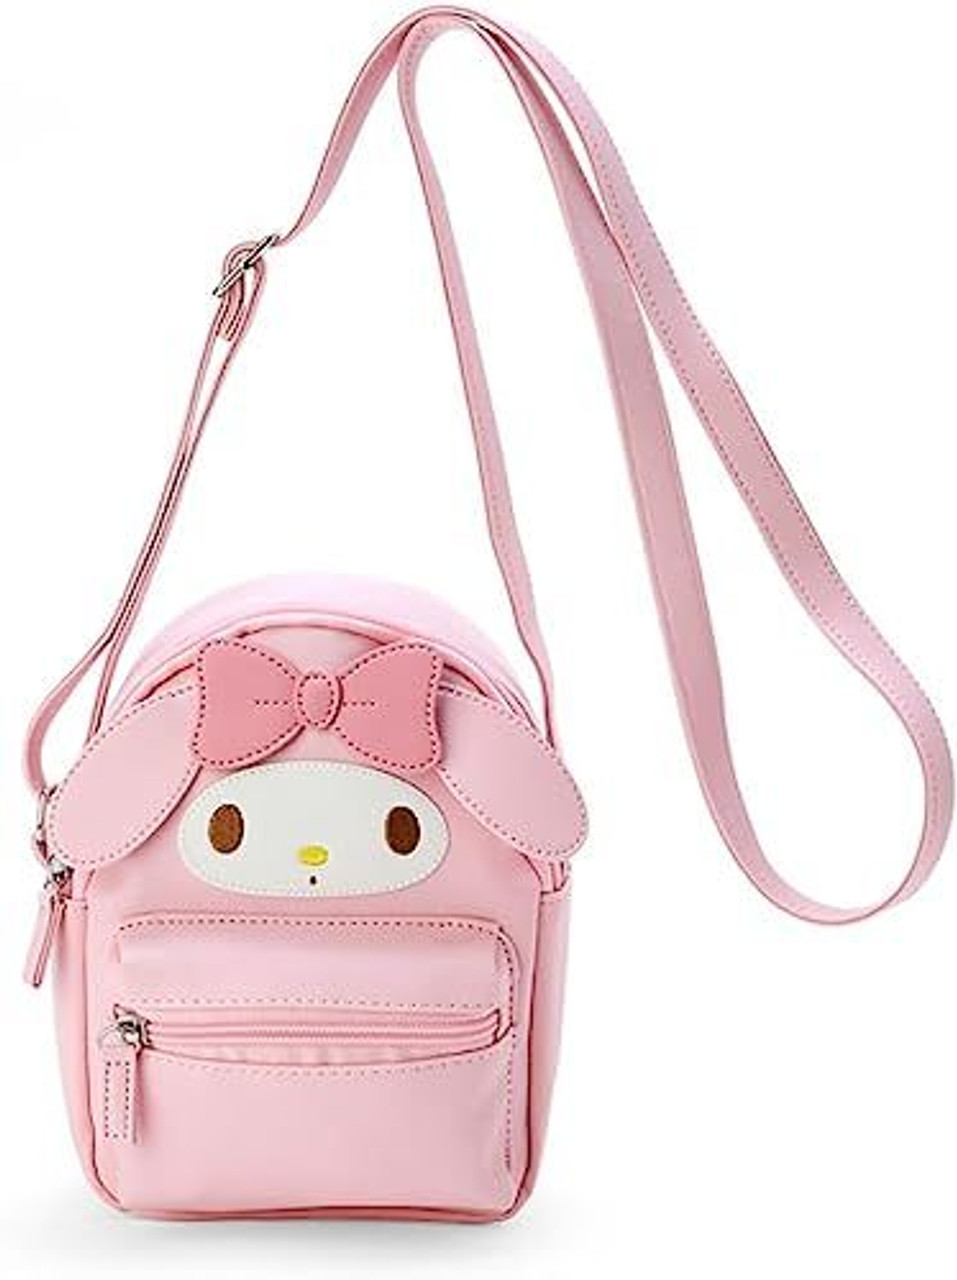 Sanrio Mini Shoulder Bag - My Melody